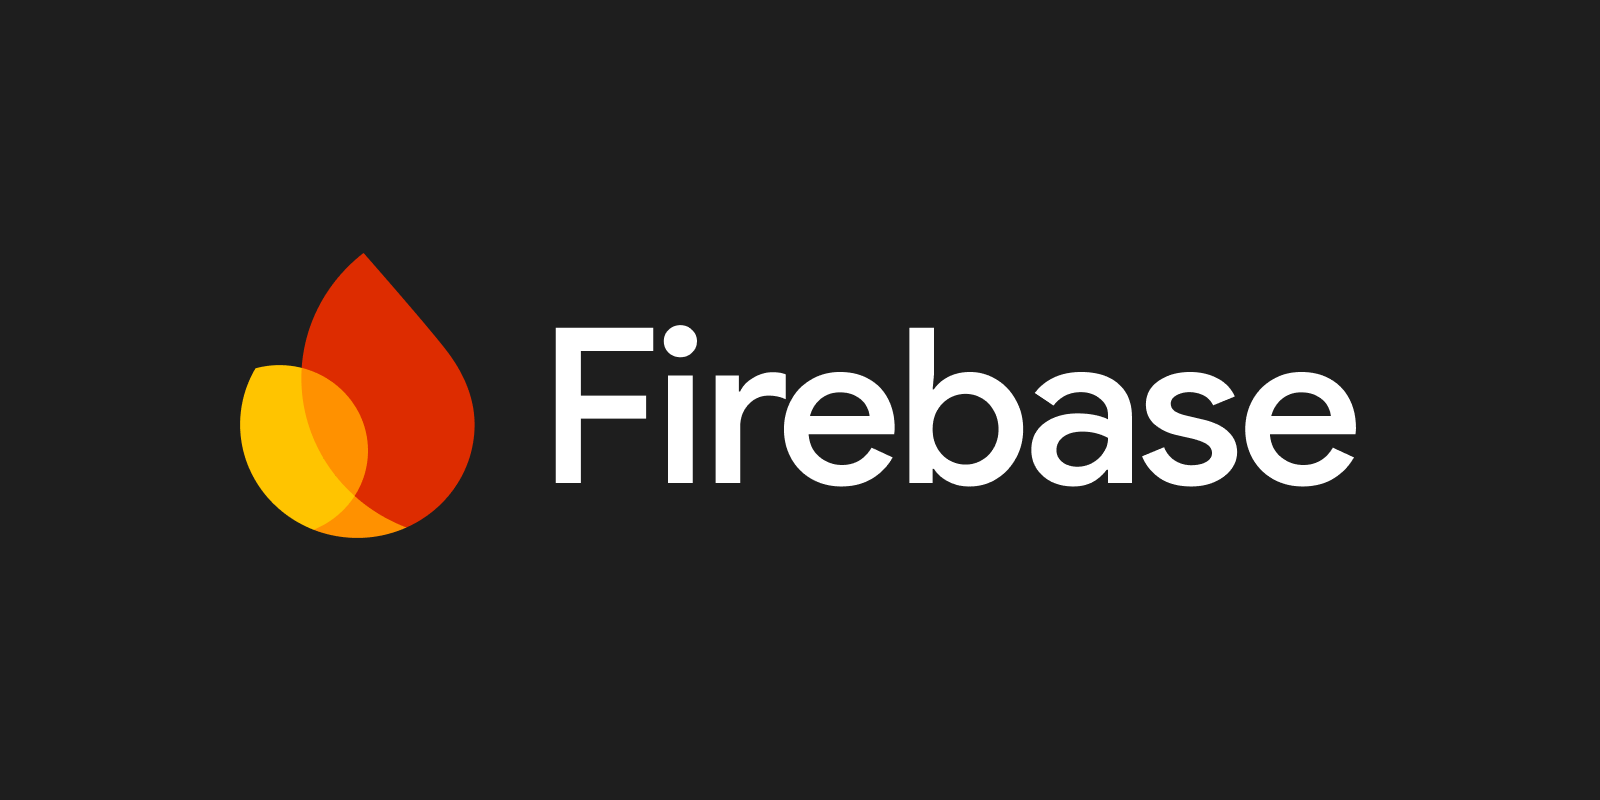 Firebase | Google's Mobile and Web App Development Platform